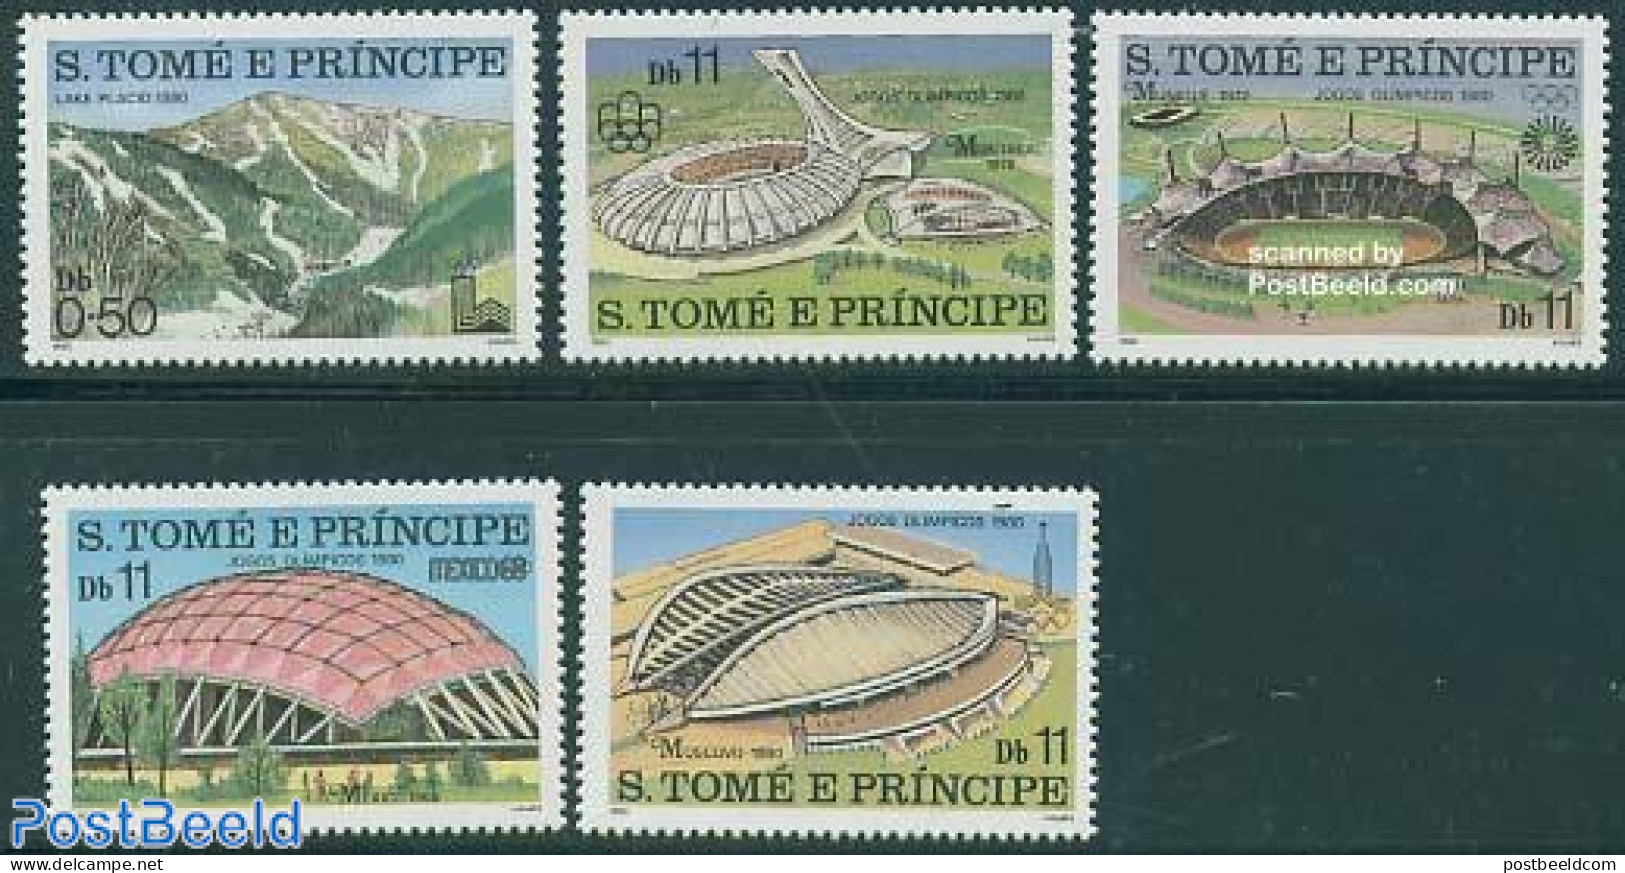 Sao Tome/Principe 1980 Olympic Games 5v, Mint NH, Sport - Olympic Games - Olympic Winter Games - Sao Tome Et Principe